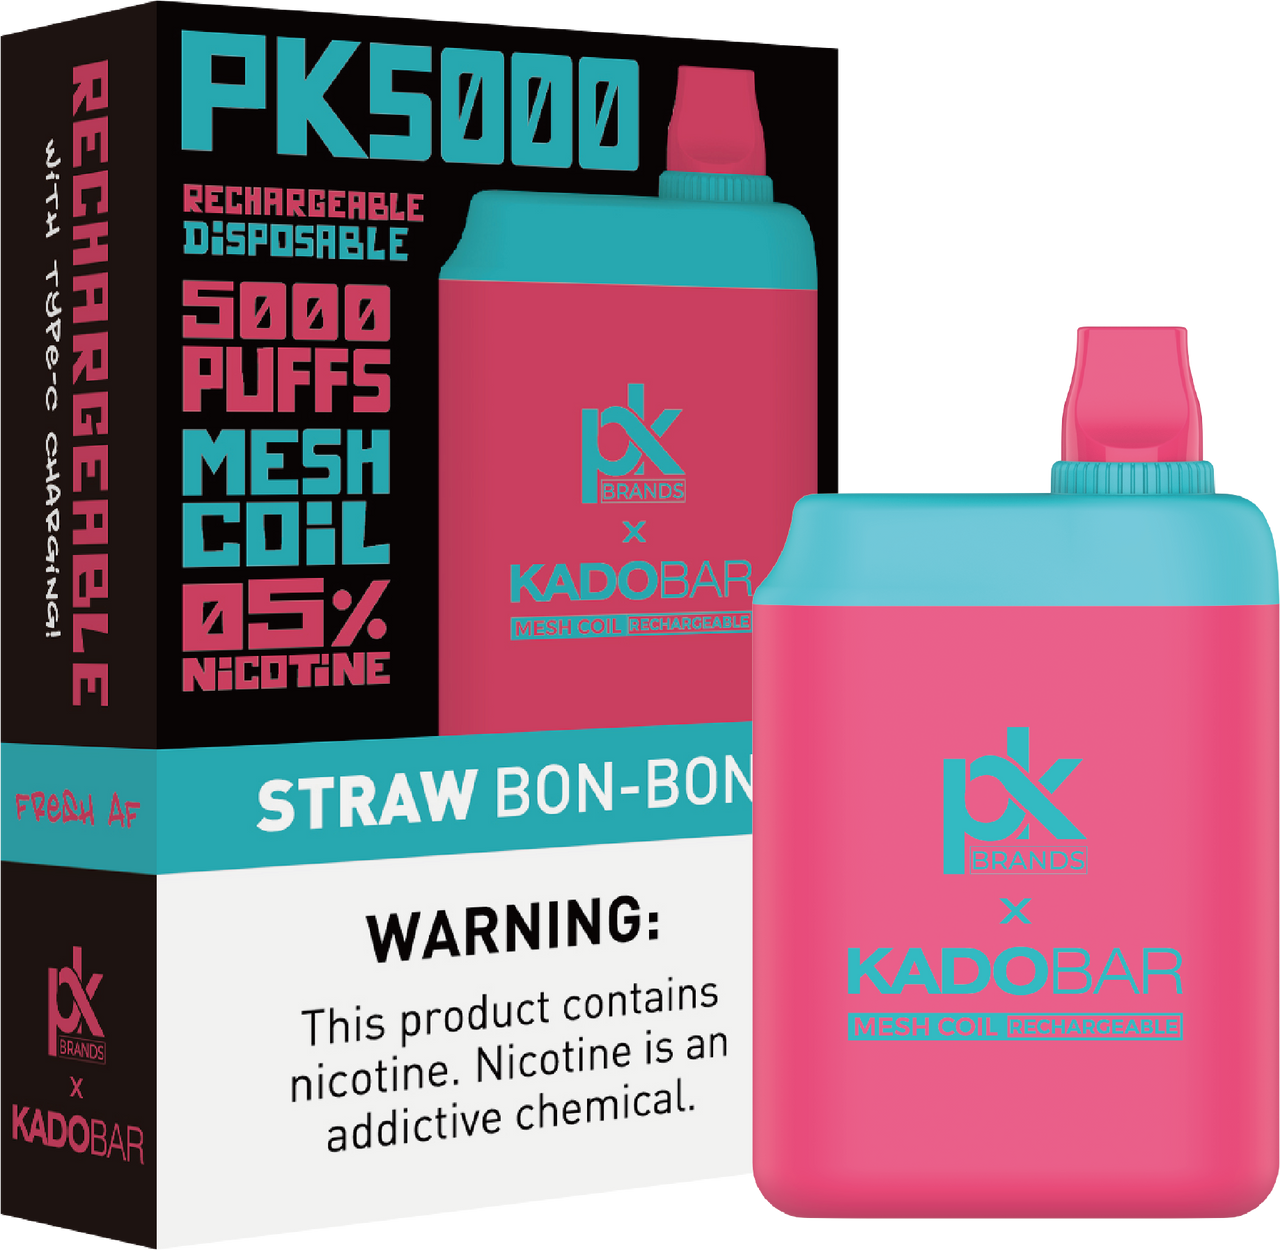 Pod King Kado Bar PK5000 Disposable - Distribution